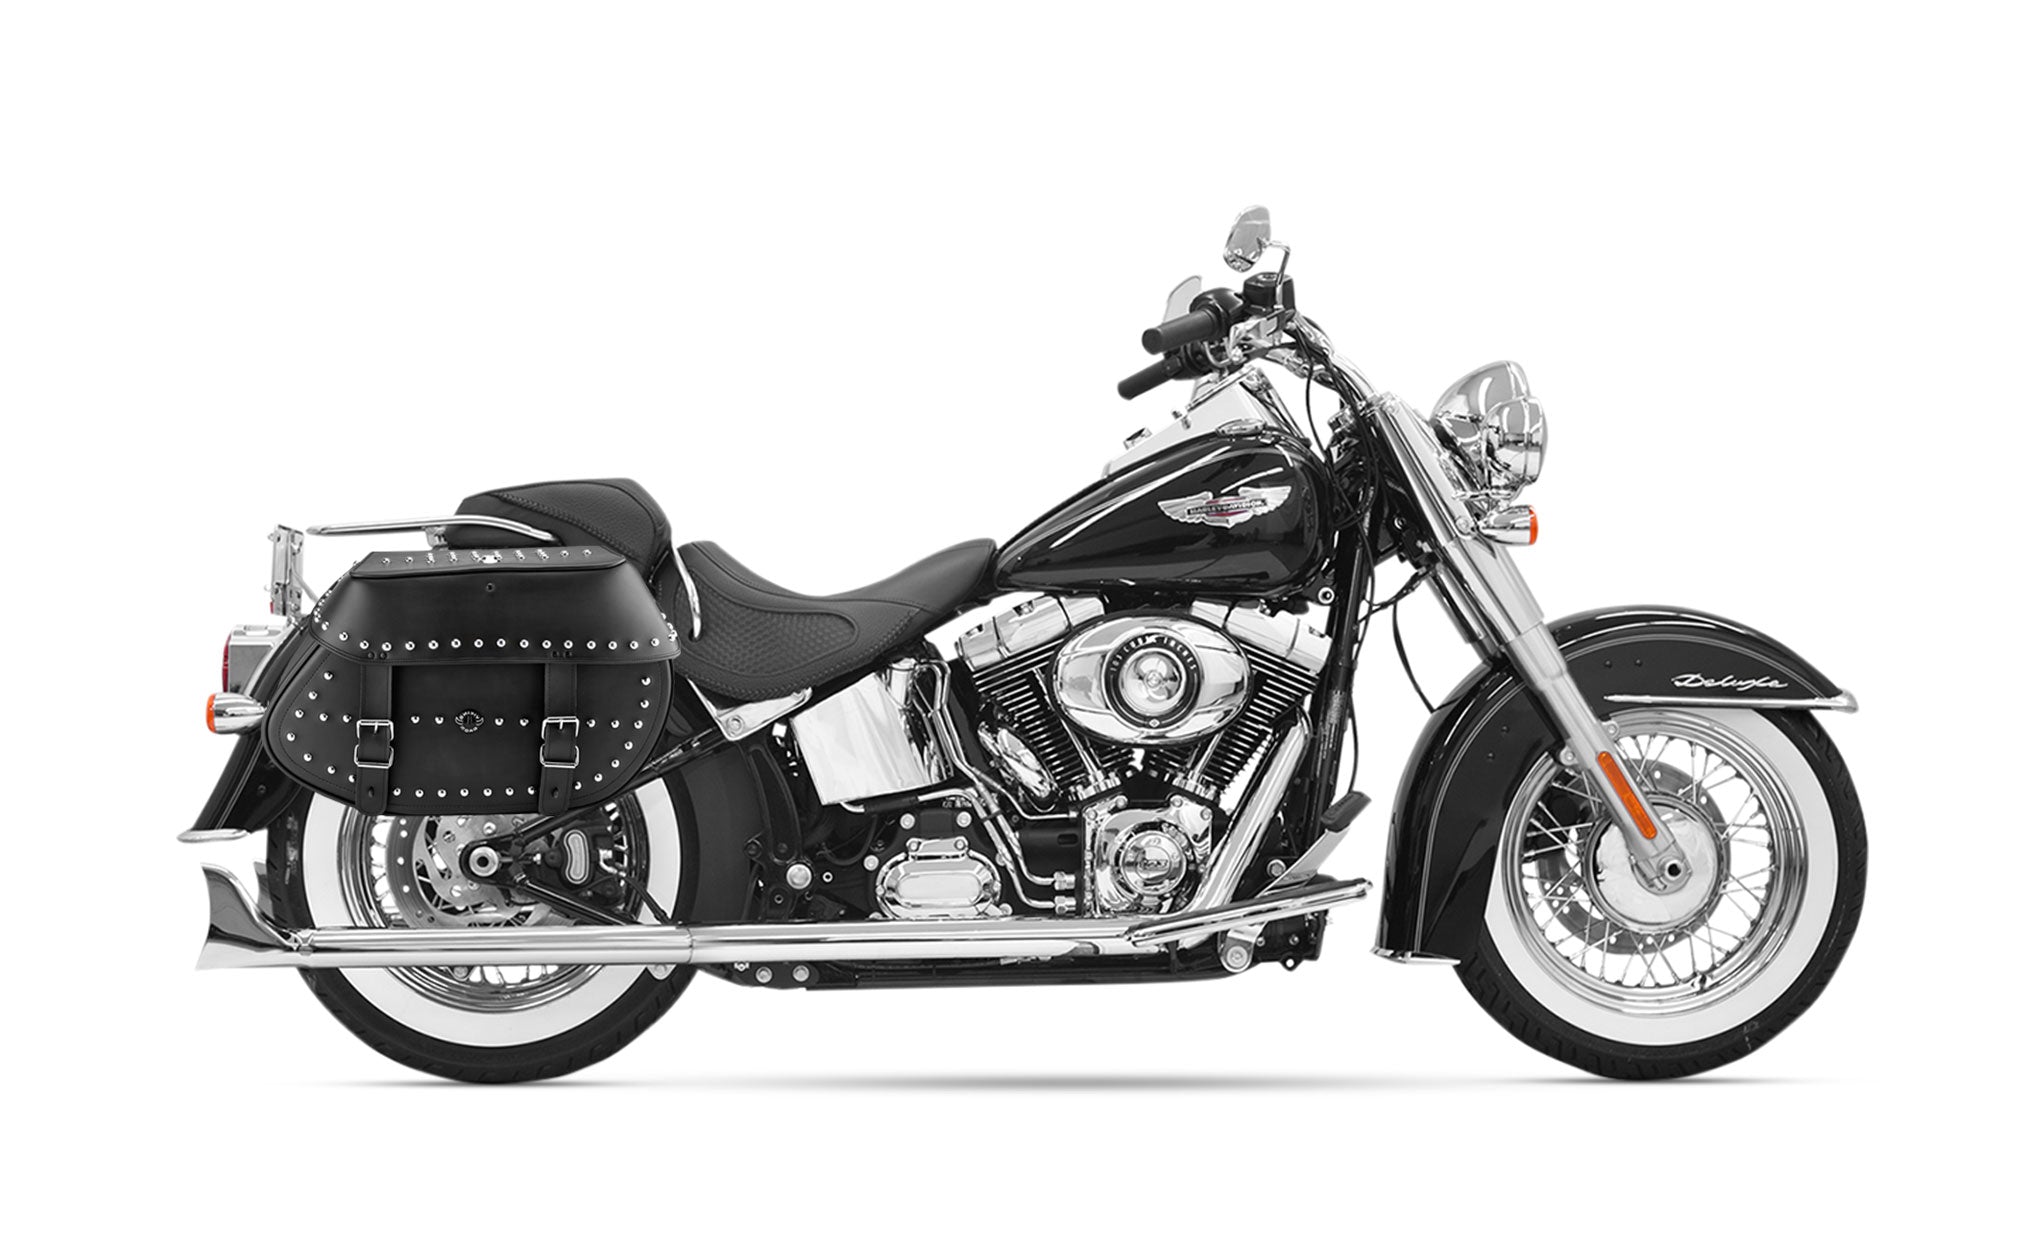 35L - Legacy Extra Large Studded Leather Motorcycle Saddlebags for Harley Softail Heritage FLSTICCI on Bike Photo @expand